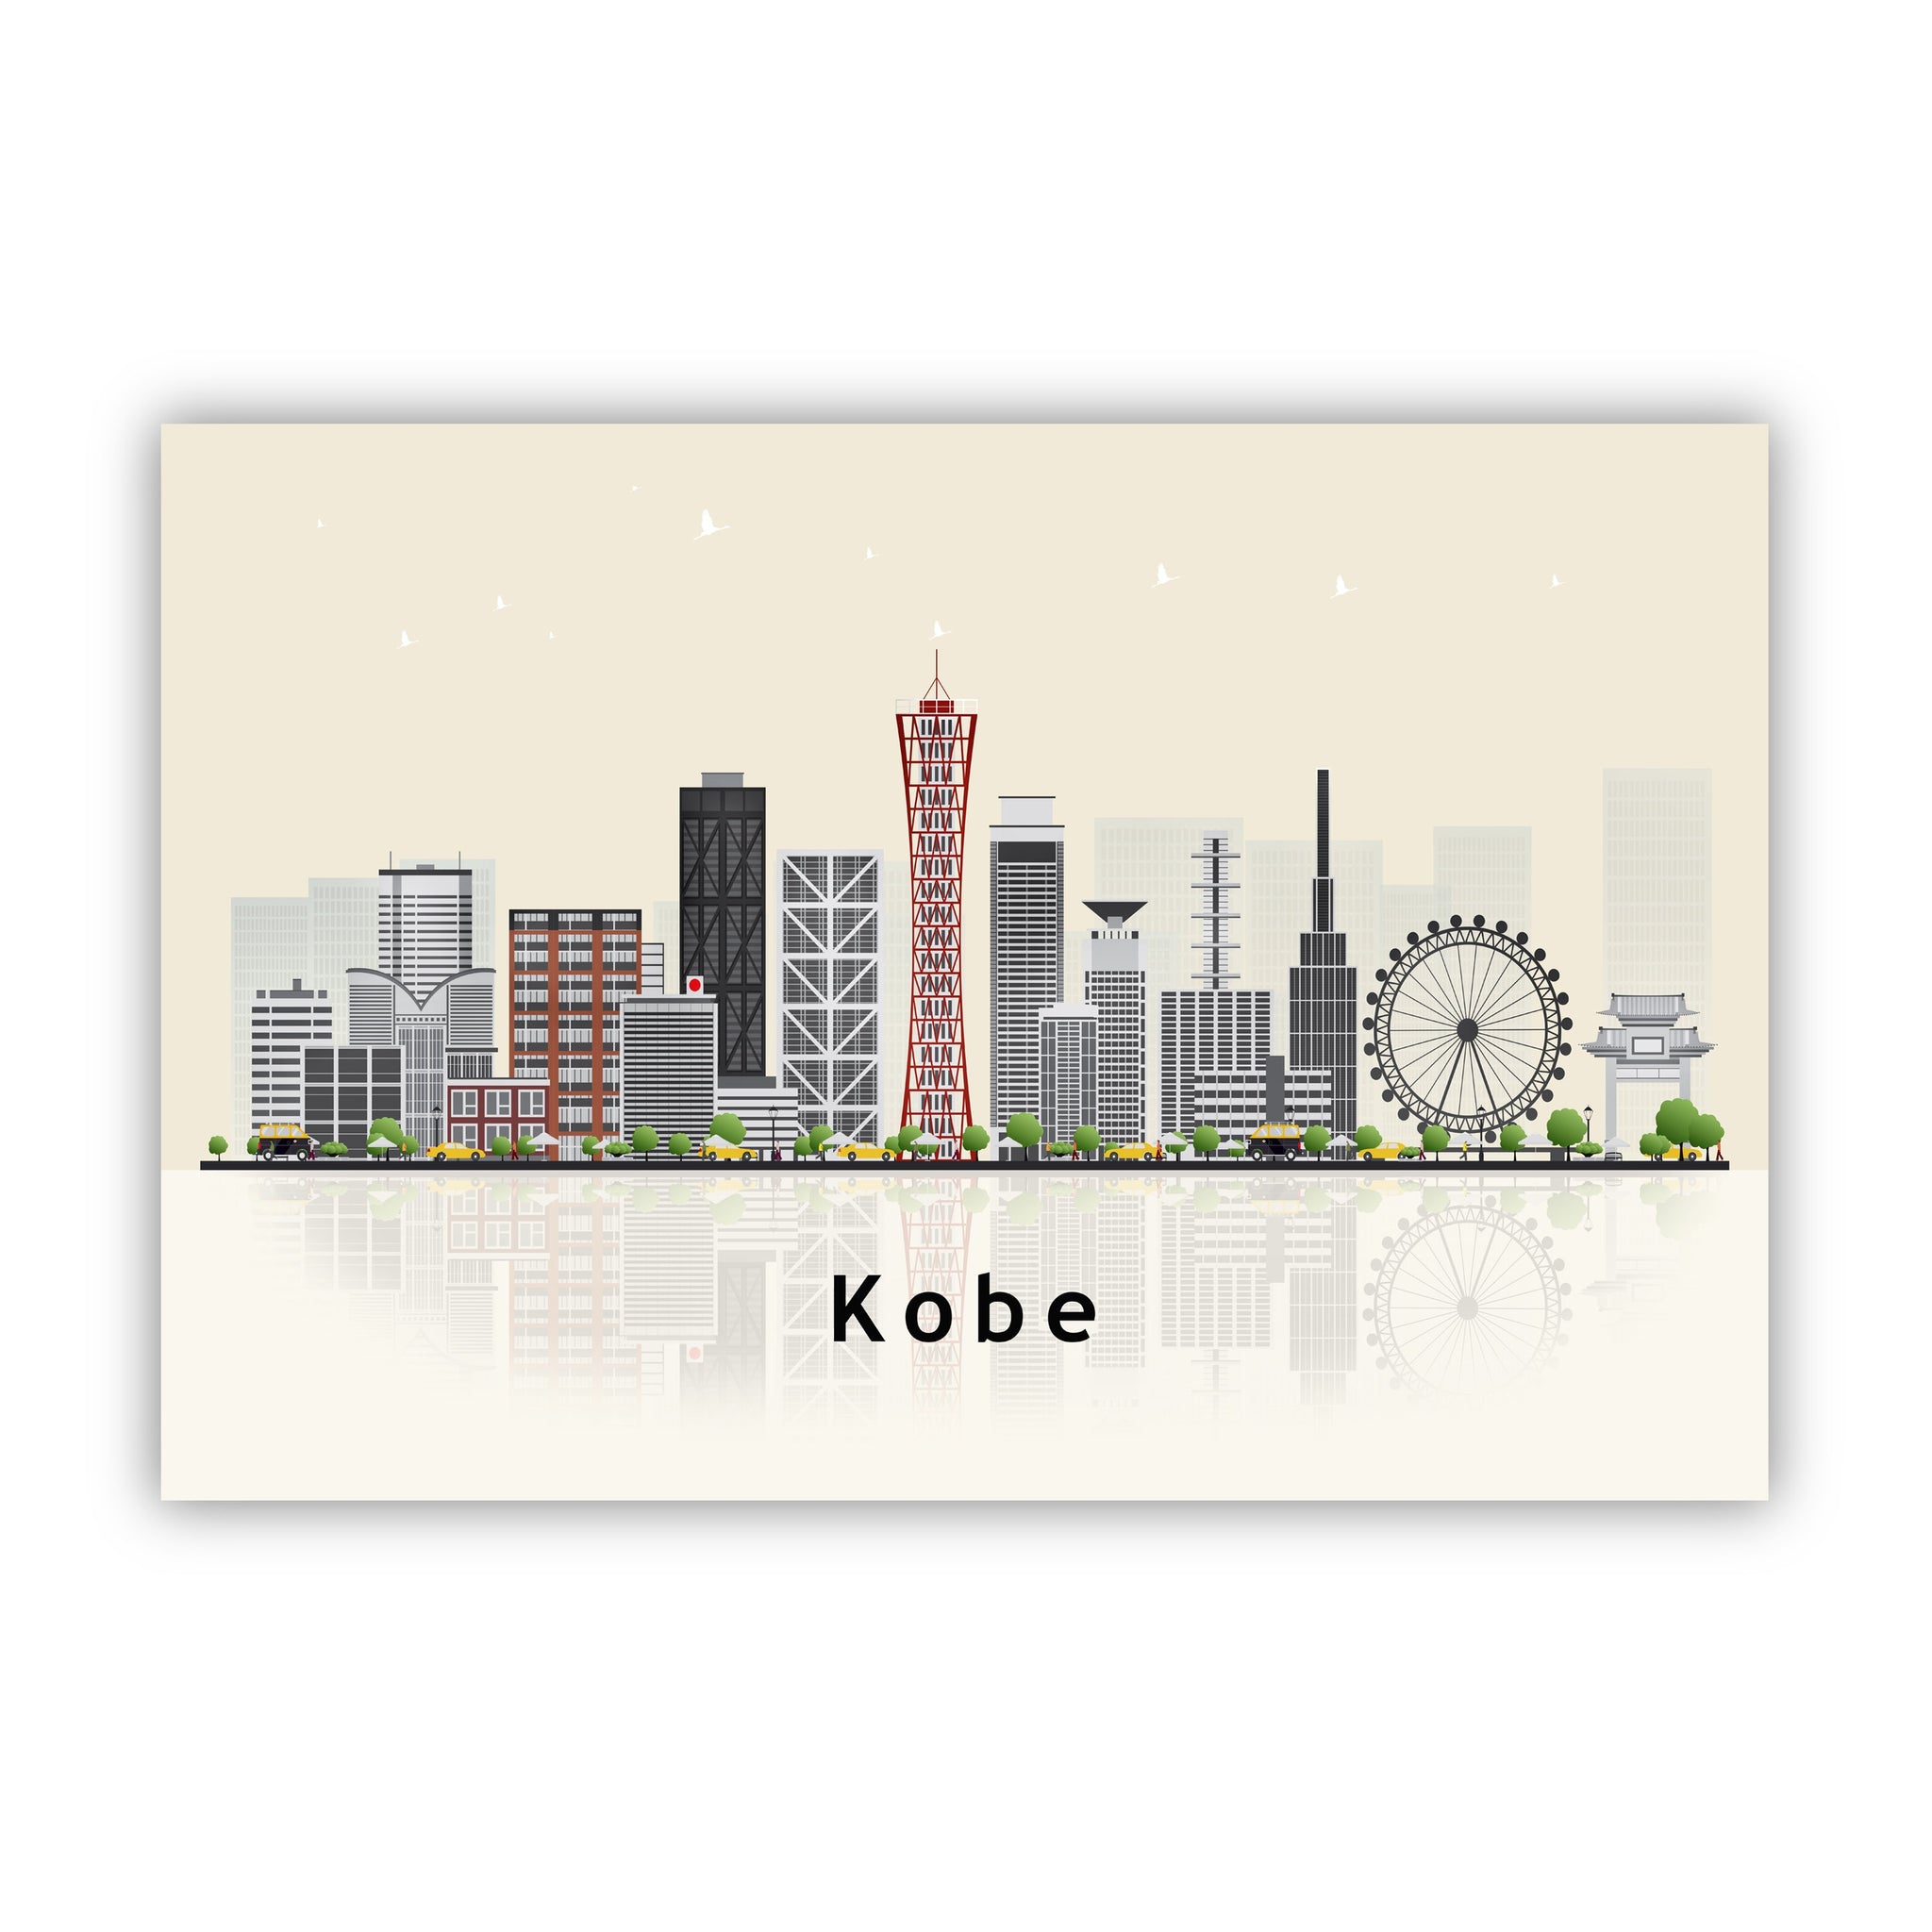 KOBE JAPAN Illustration skyline poster, Modern skyline cityscape poster, Kobe Japan city skyline landmark map poster, Home wall decorations